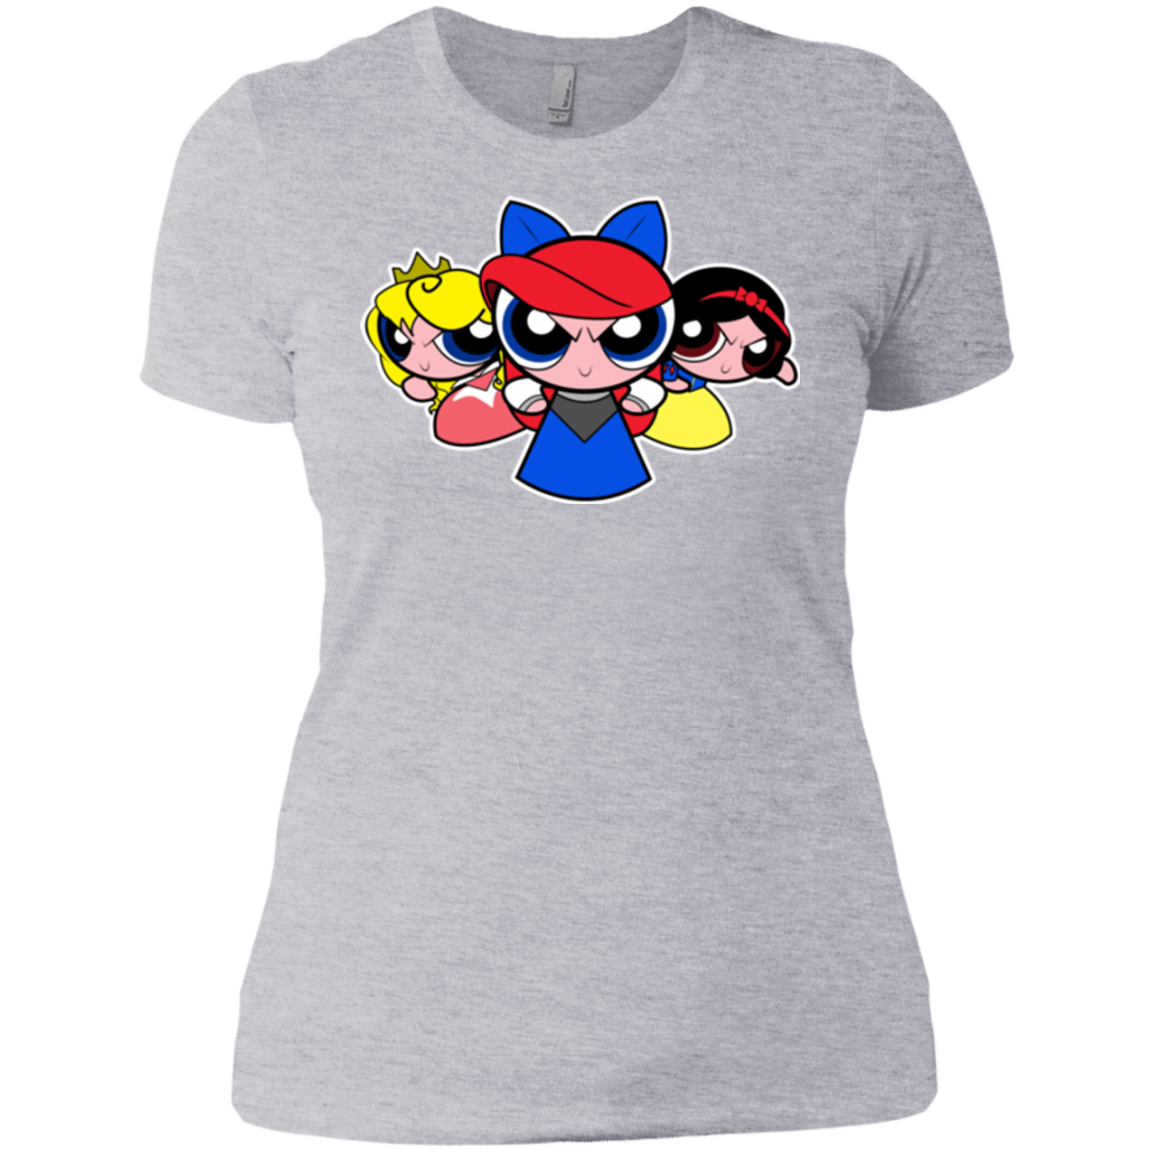 Princess Puff Girls Women's Premium T-Shirt